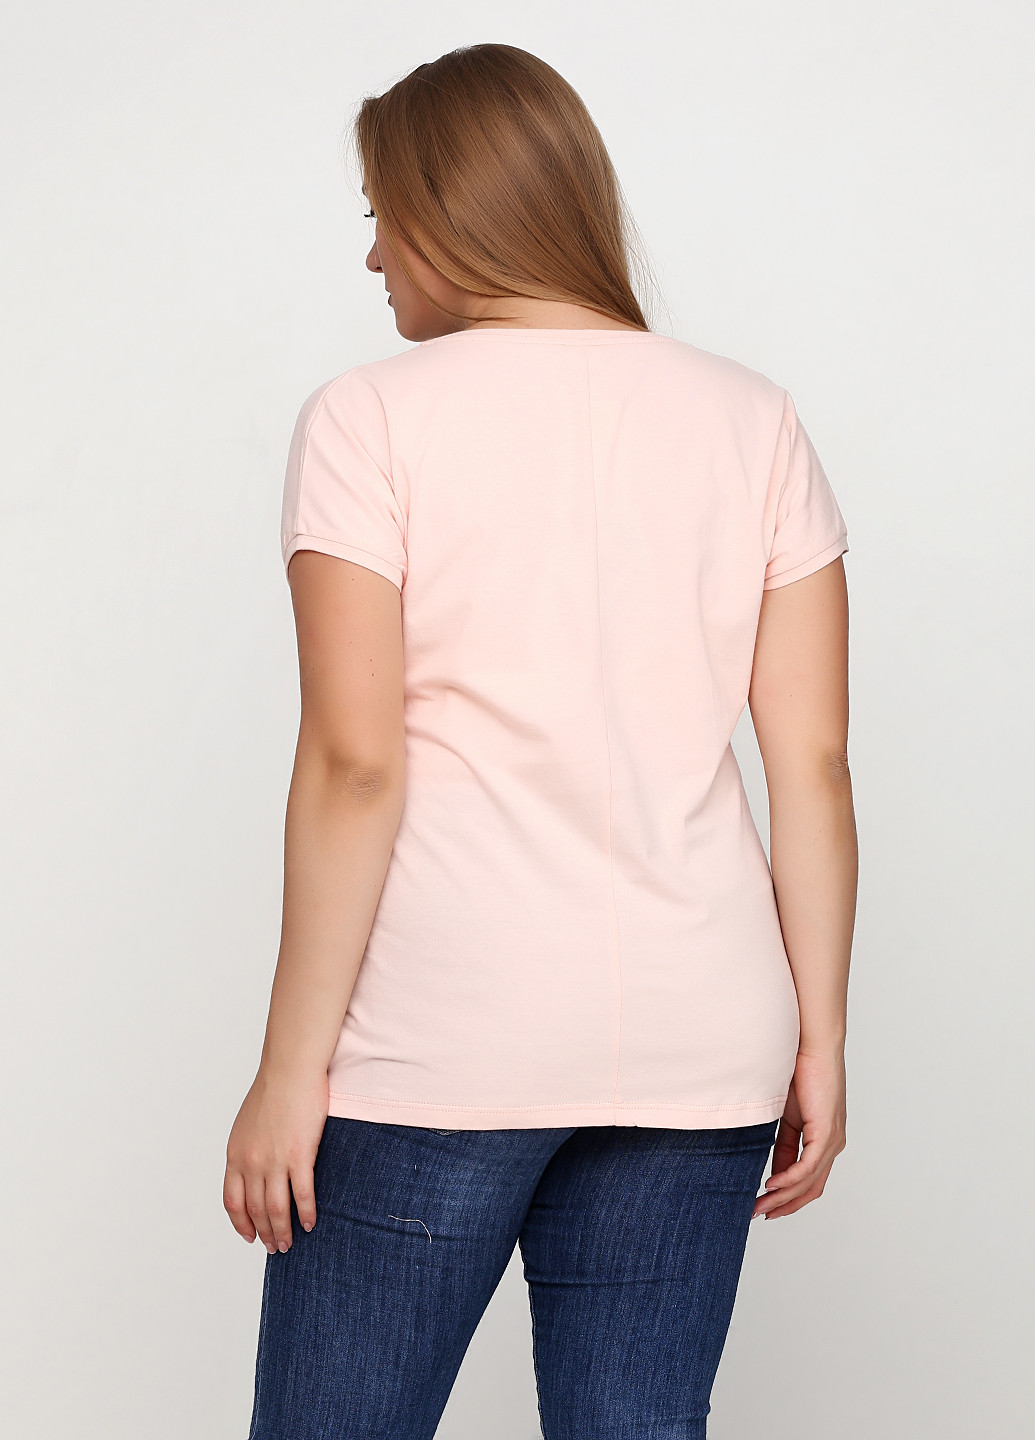 Светло-розовая летняя футболка Роза